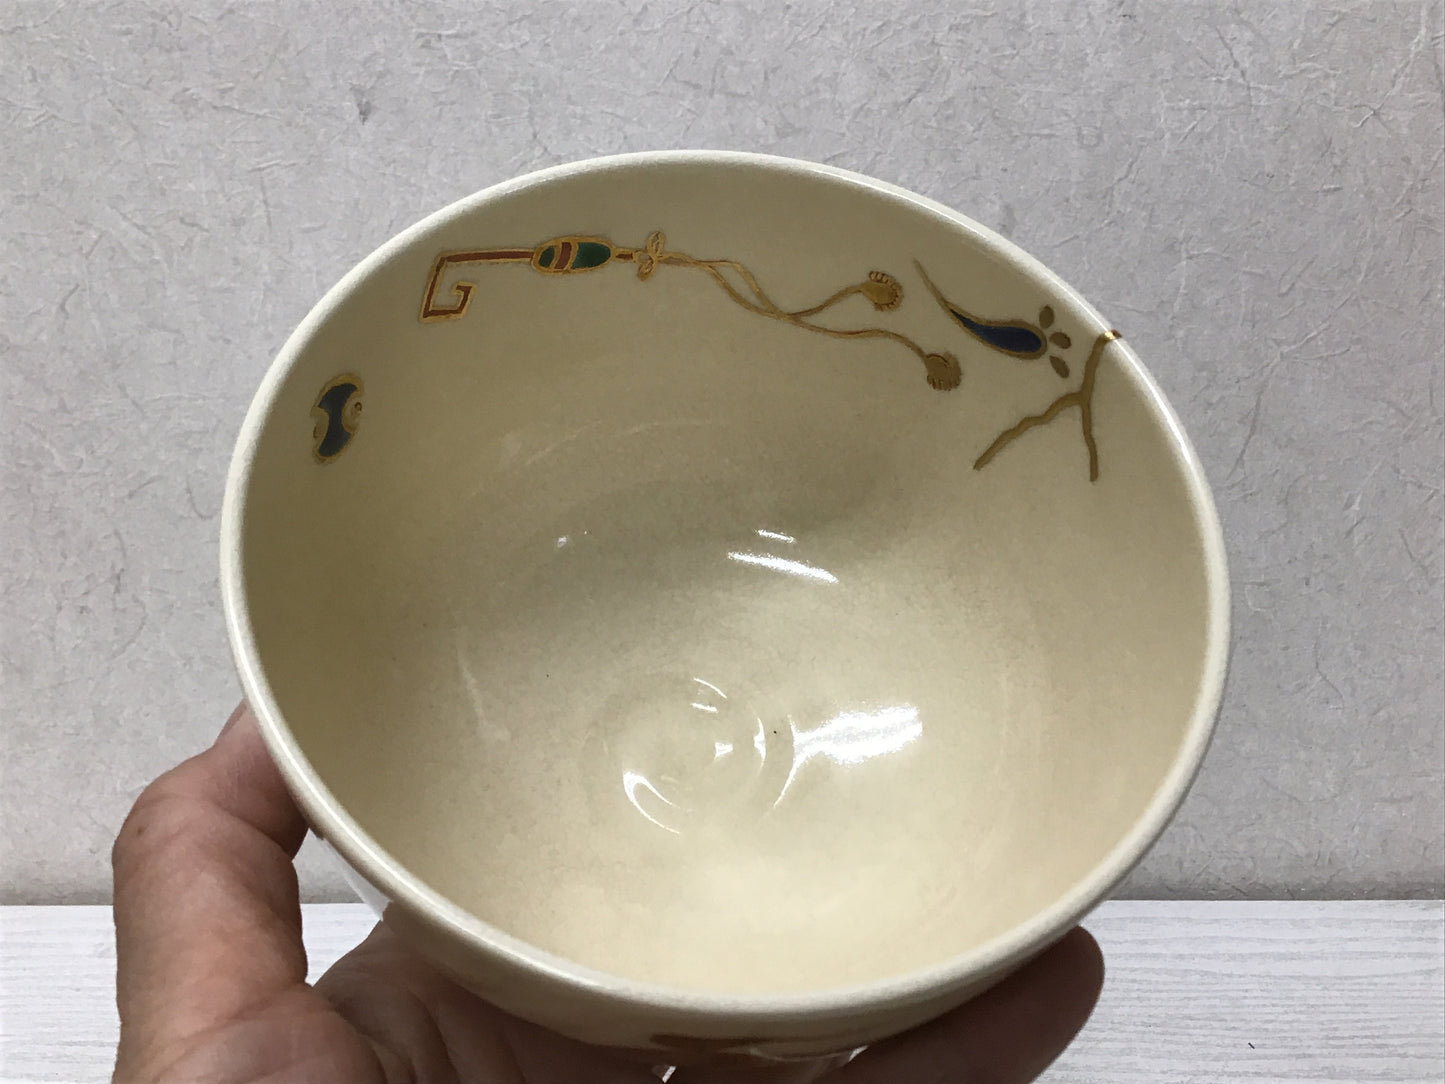 Y1986 CHAWAN Kyo-ware signed box kintsugi Japanese bowl pottery tea ceremony